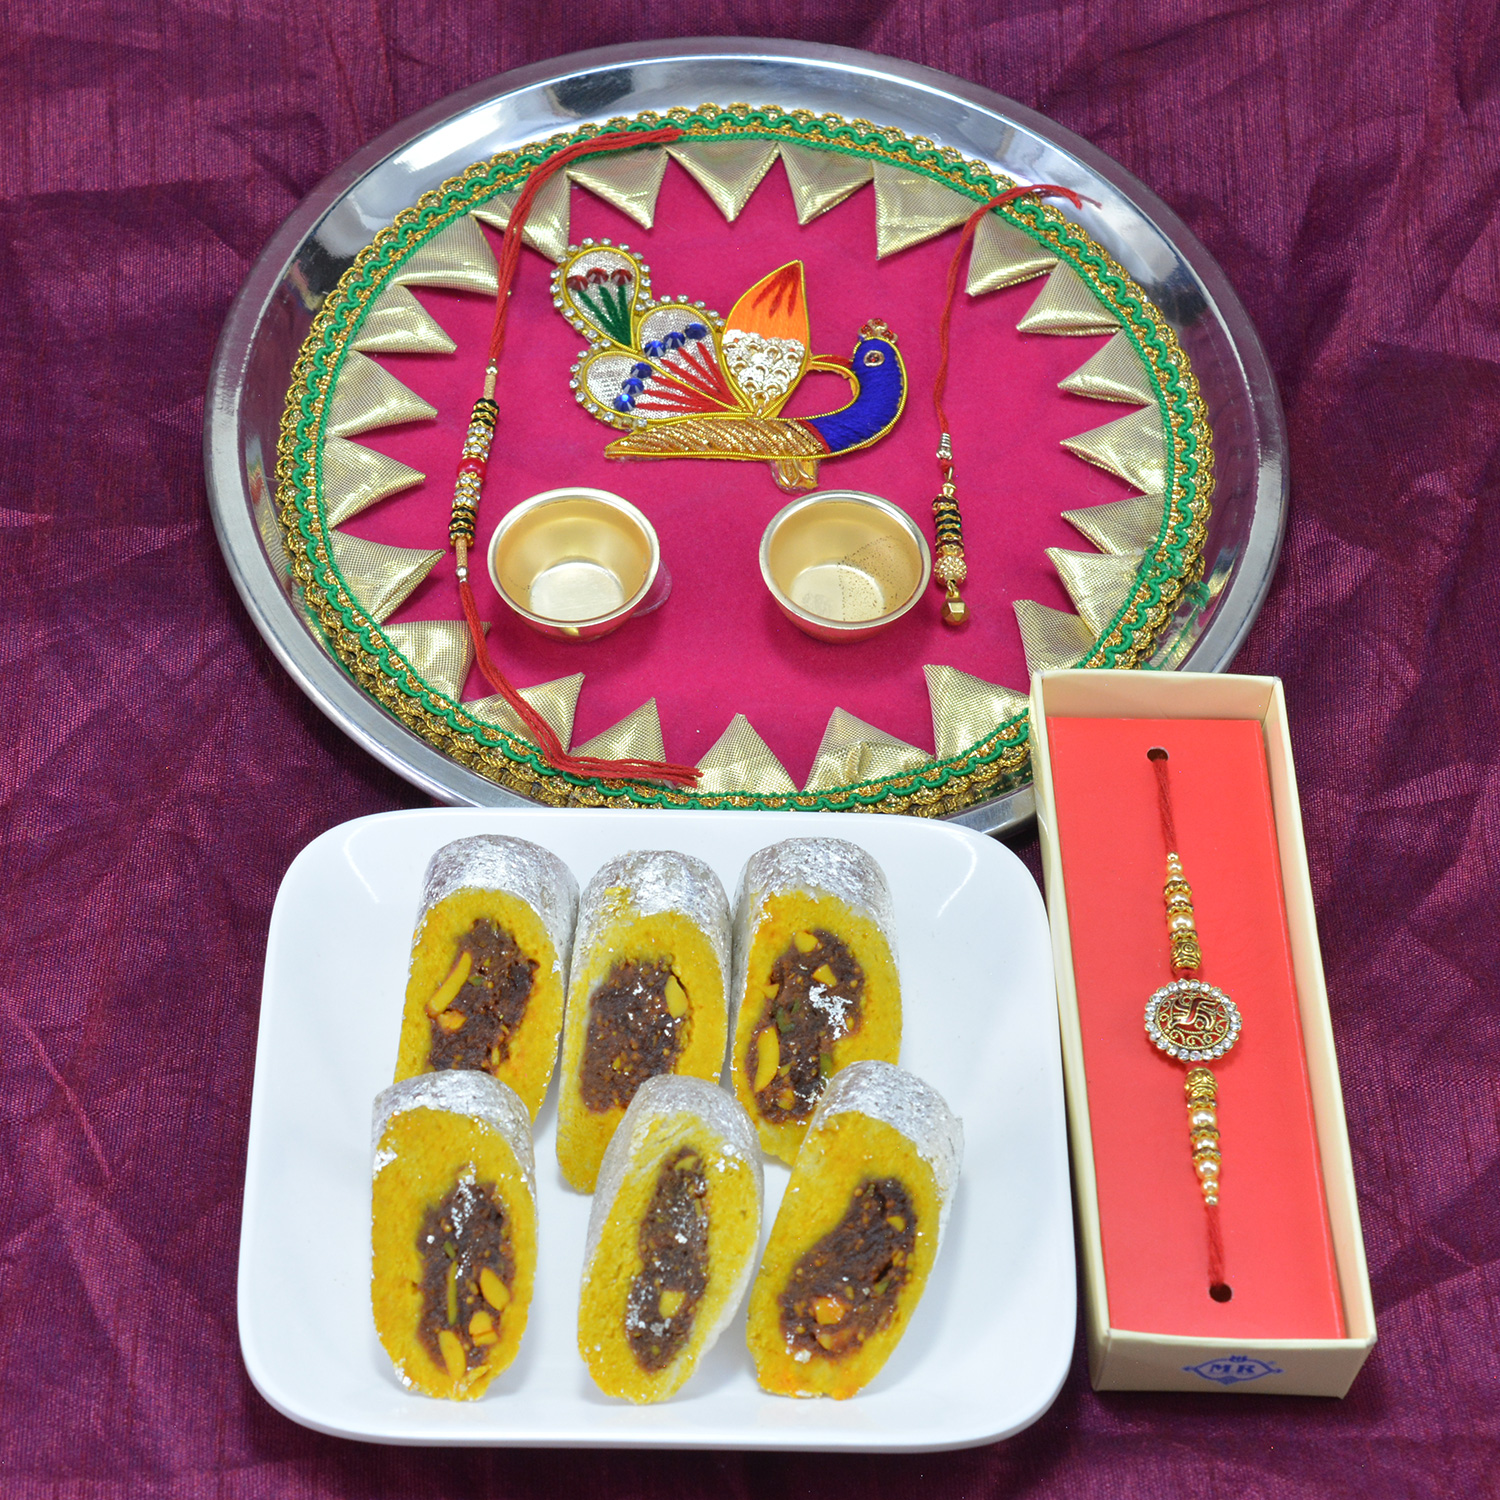 Marvelous Peacock Design Pooja Thali with Luscious Kaju Rajbahar along with Diamond Jewel Rakhi